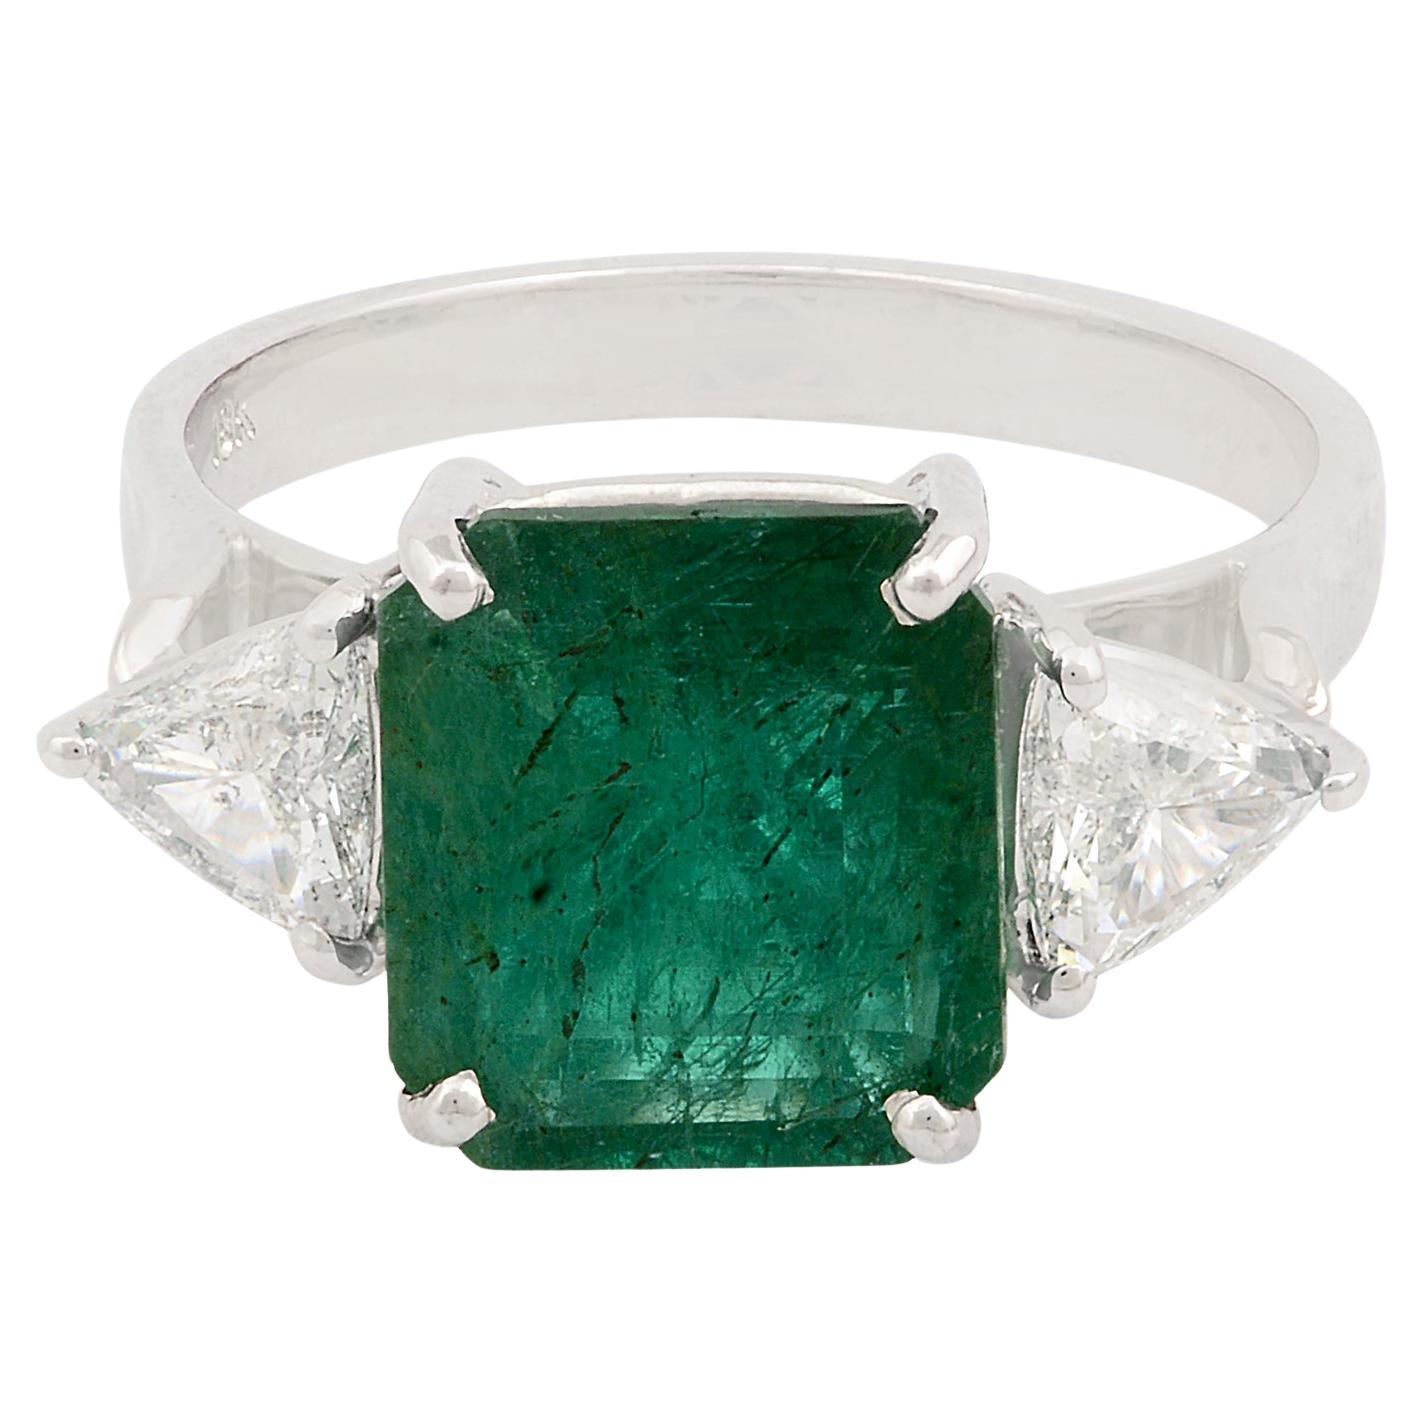 Zambian Emerald Gemstone Cocktail Ring Pear Diamond Solid 18k White Gold Jewelry